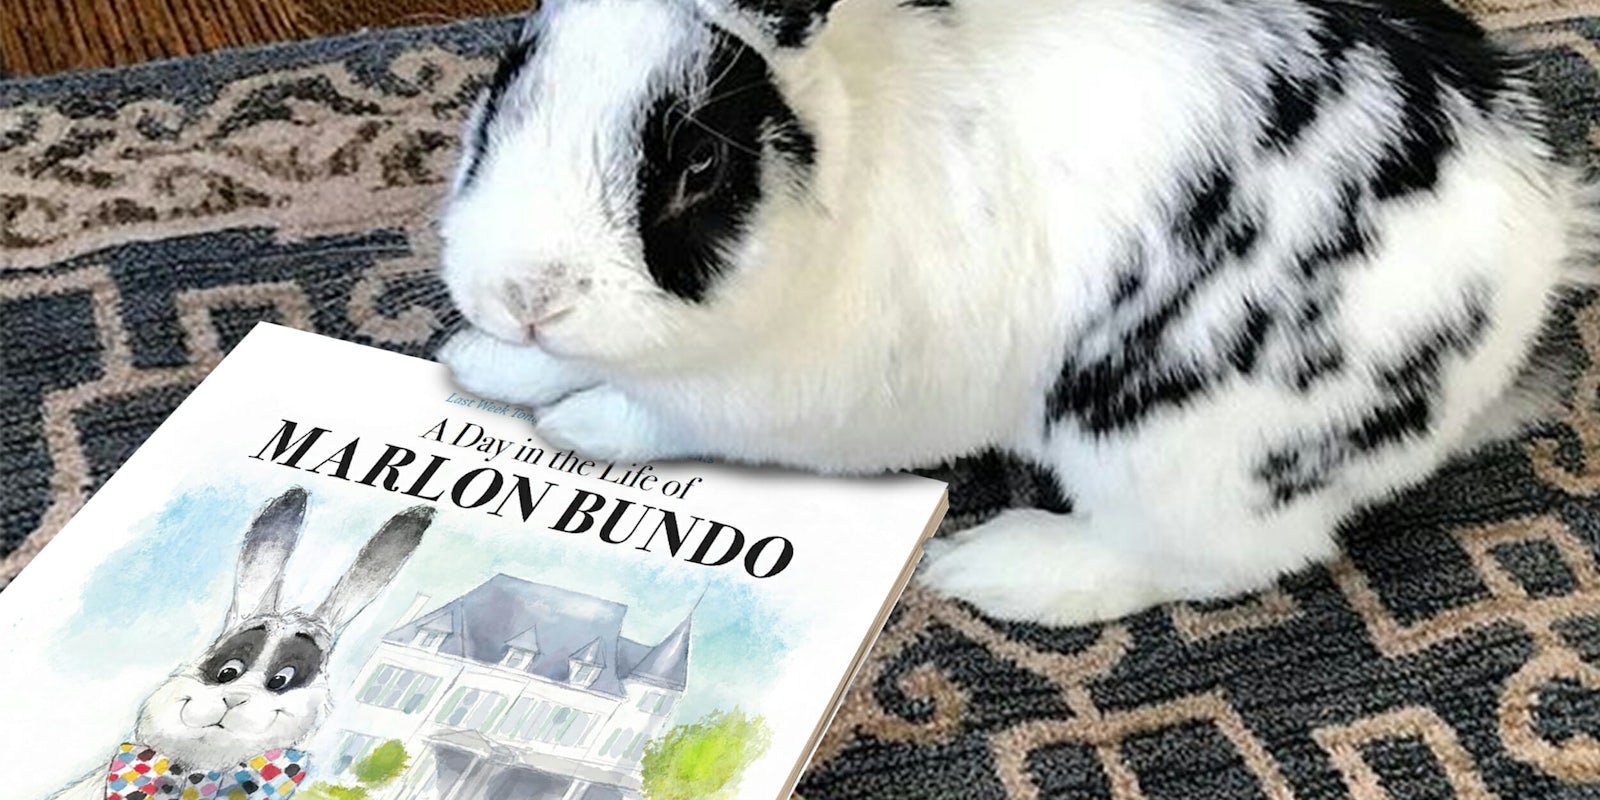 Bunny holding Marlon Bundo book